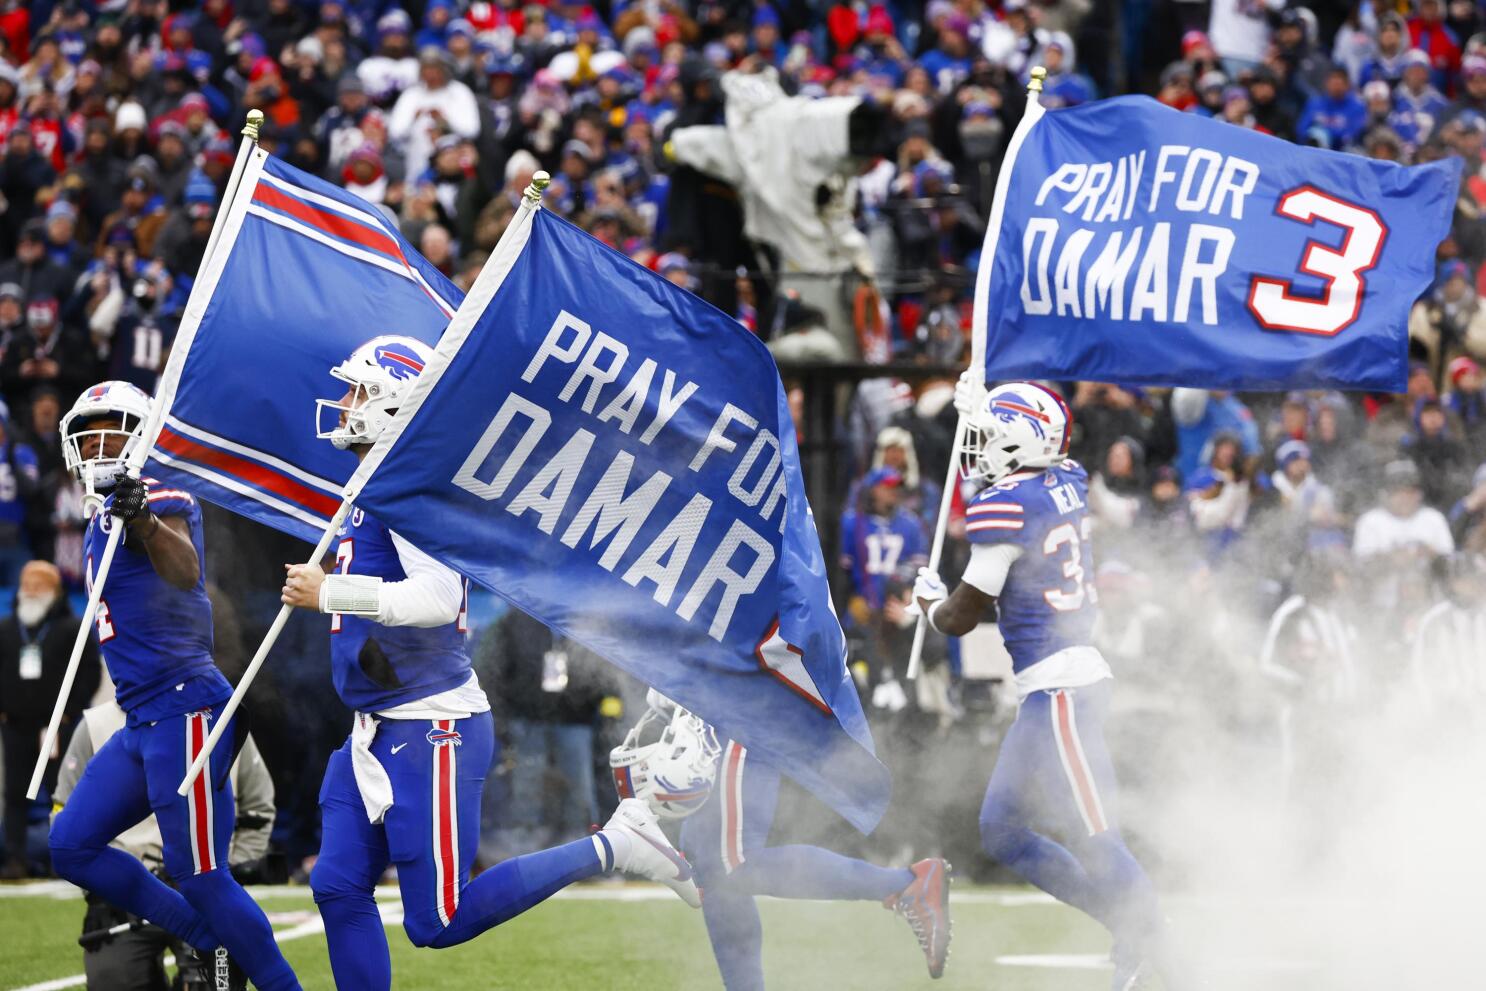 Patriots-Bills game will be played Sunday in wake of Damar Hamlin's collapse